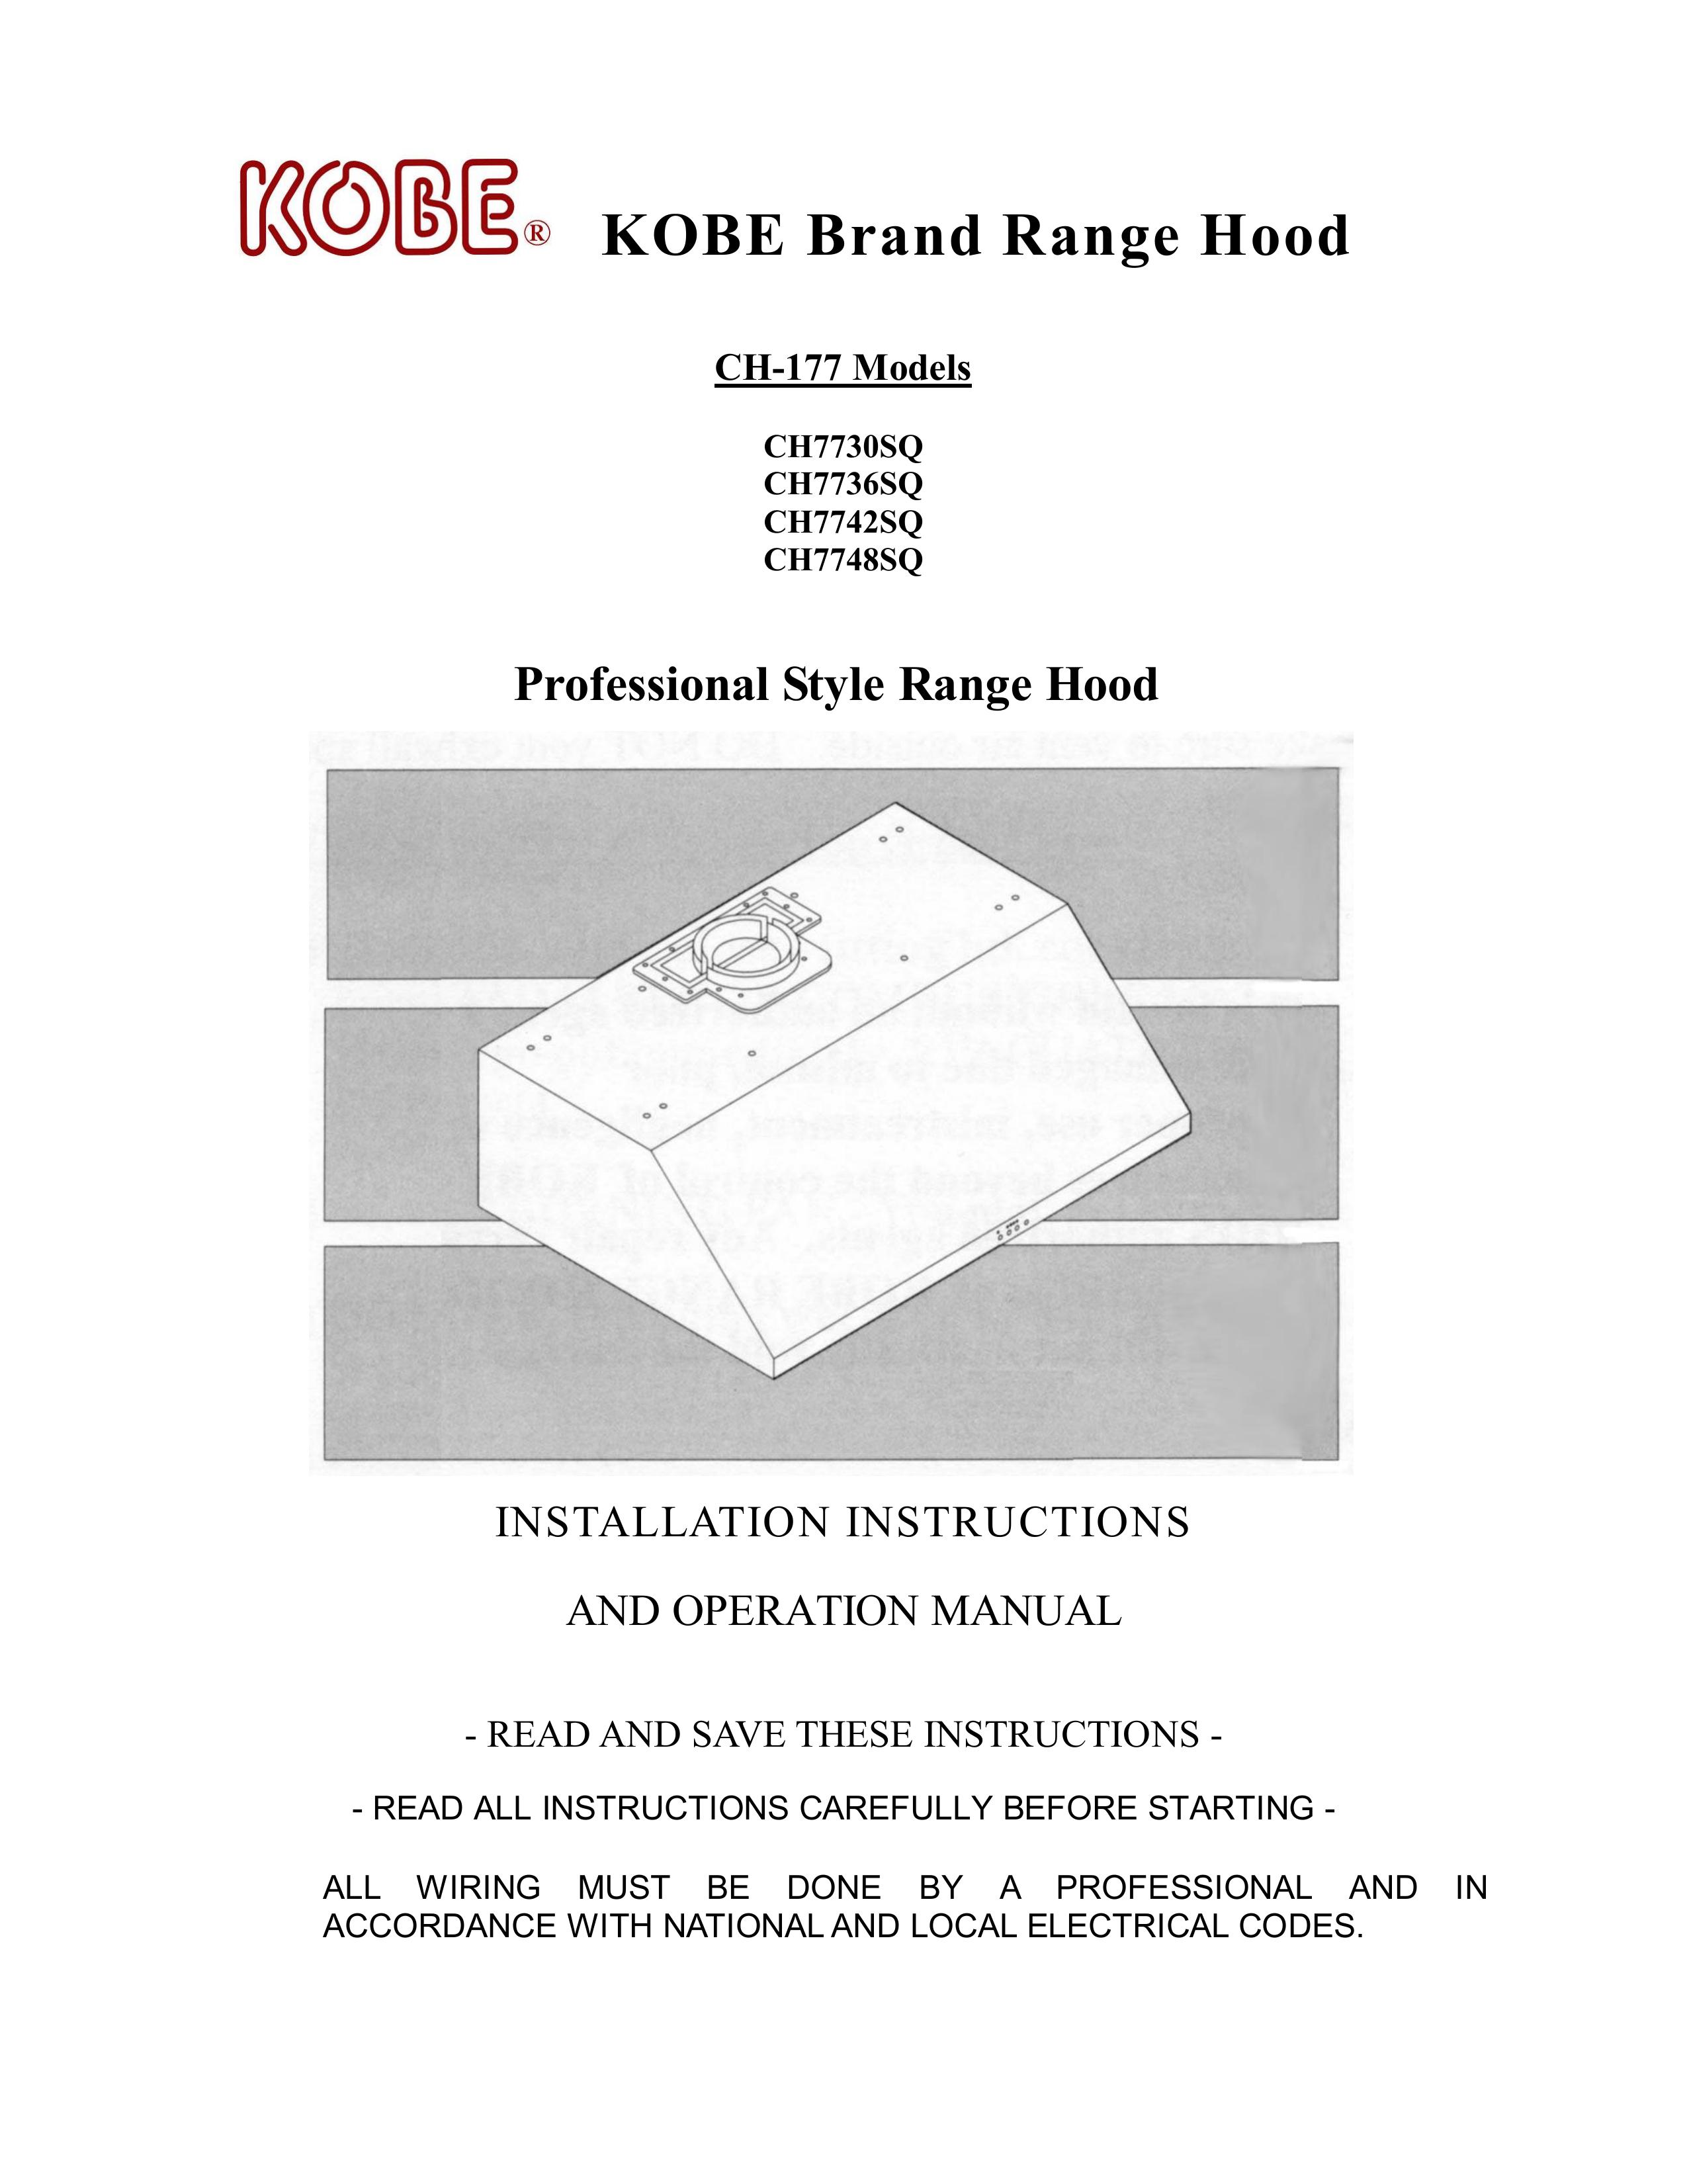 Kobe Range Hoods CH7742SQ Ventilation Hood User Manual